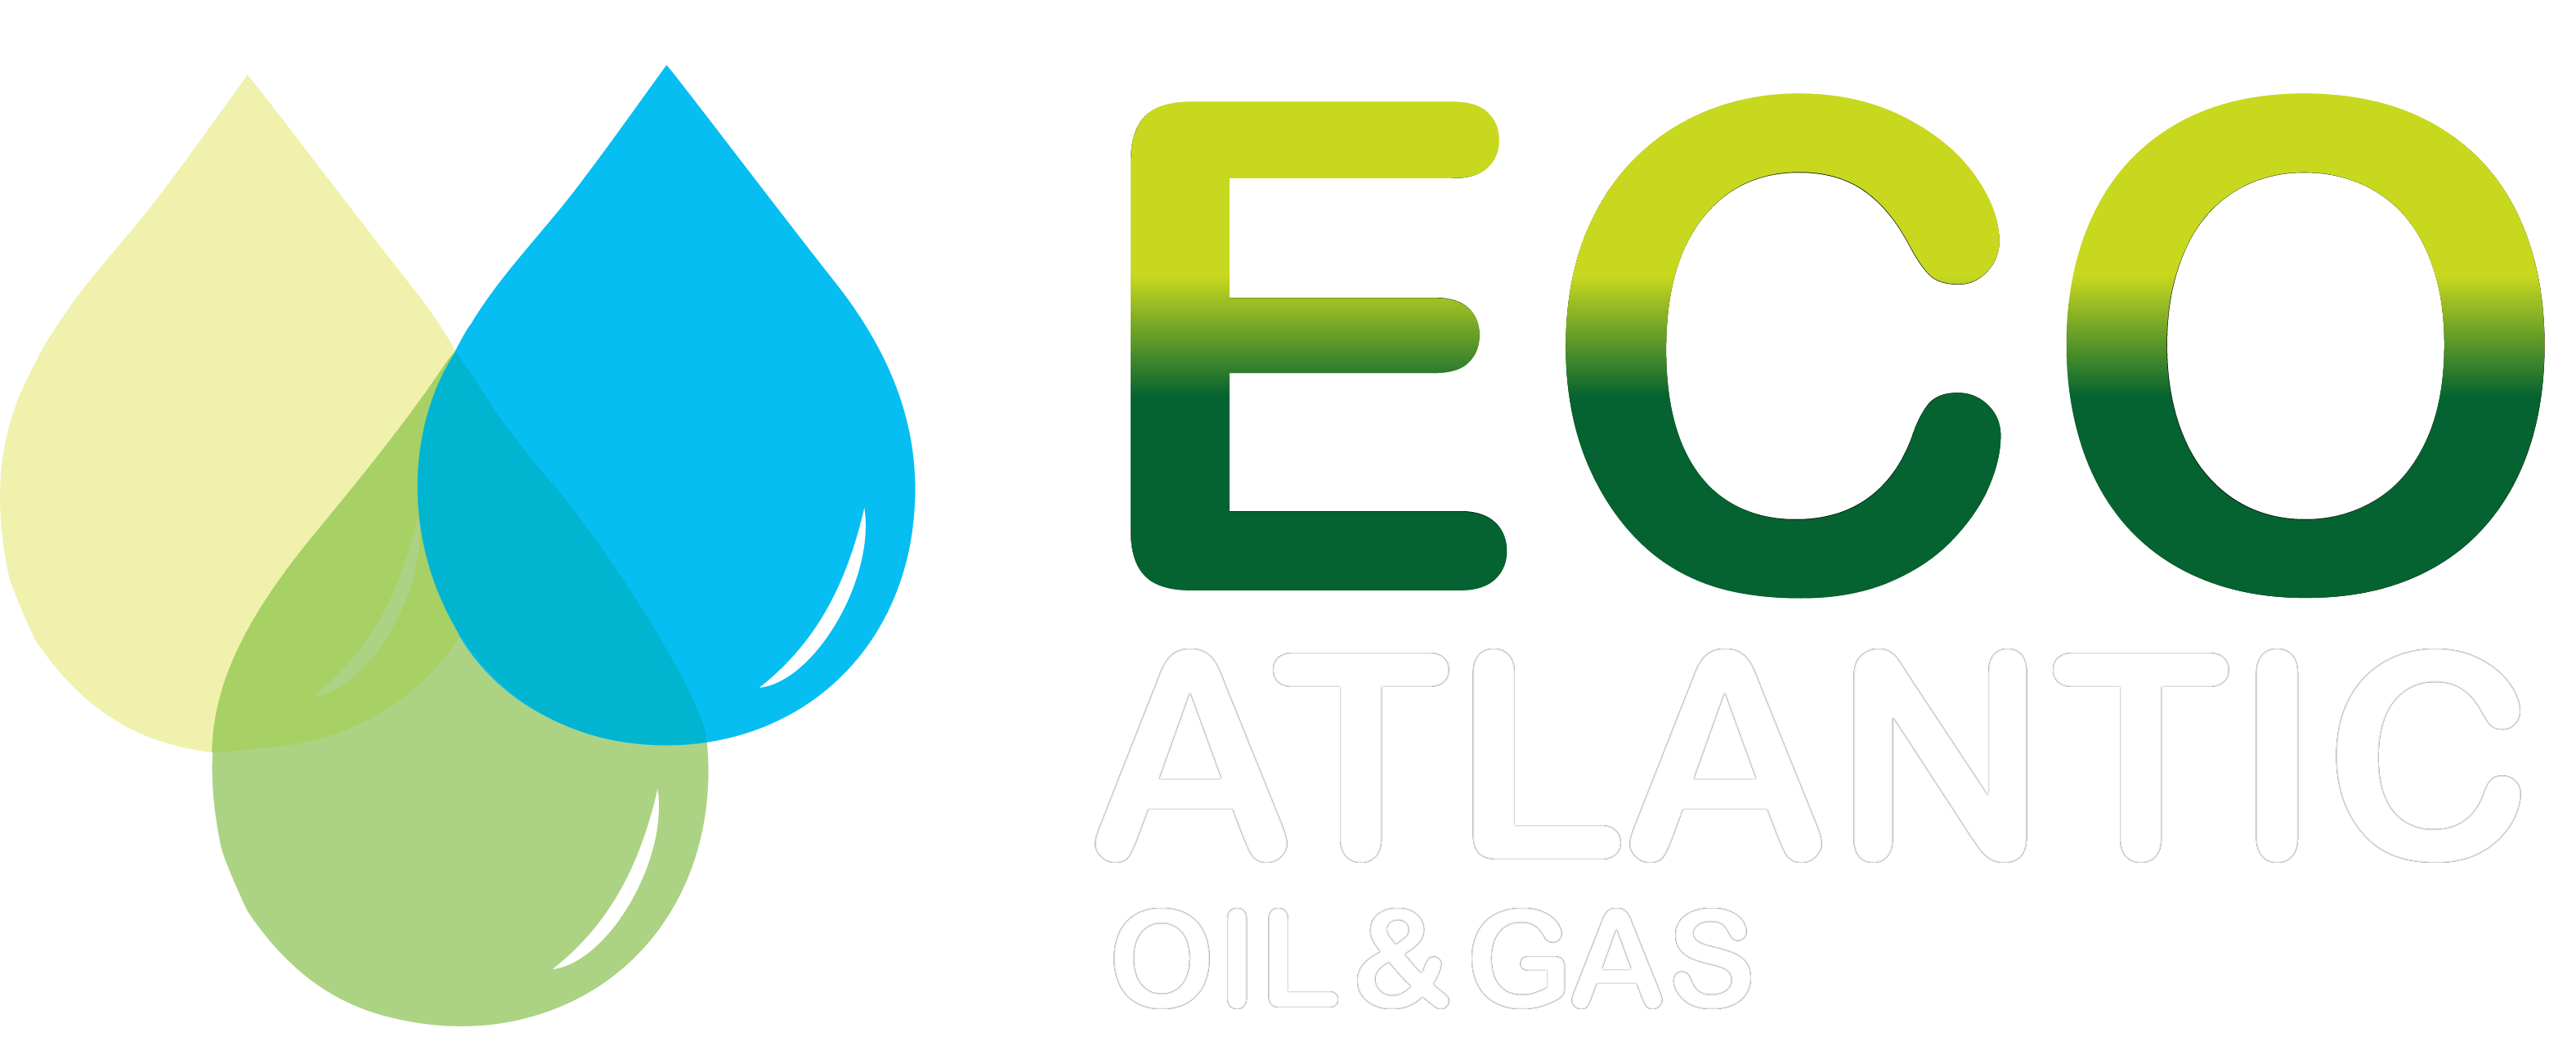 Total Oil Company Logo - Homepage - Eco (Atlantic) Oil & Gas Plc